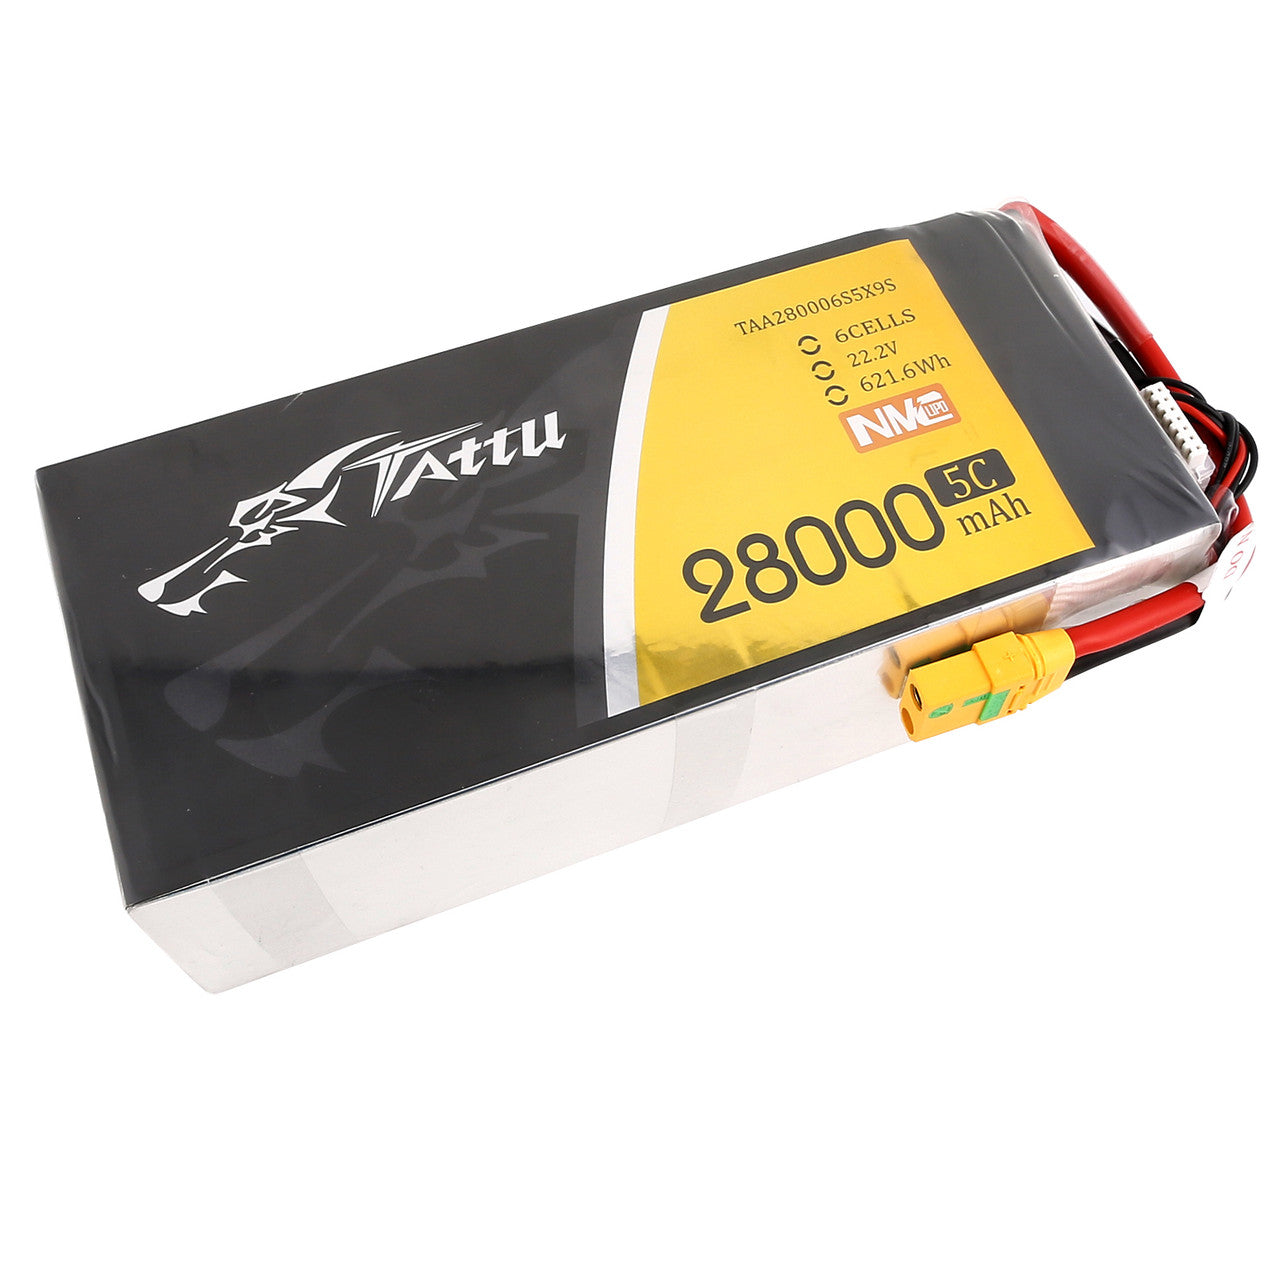 Tattu 28000mAh 6S 5C 22.2V NMC Lipo Battery, High-capacity Tattu 28Ah LiPo battery pack with XT90S plug for power-hungry devices.